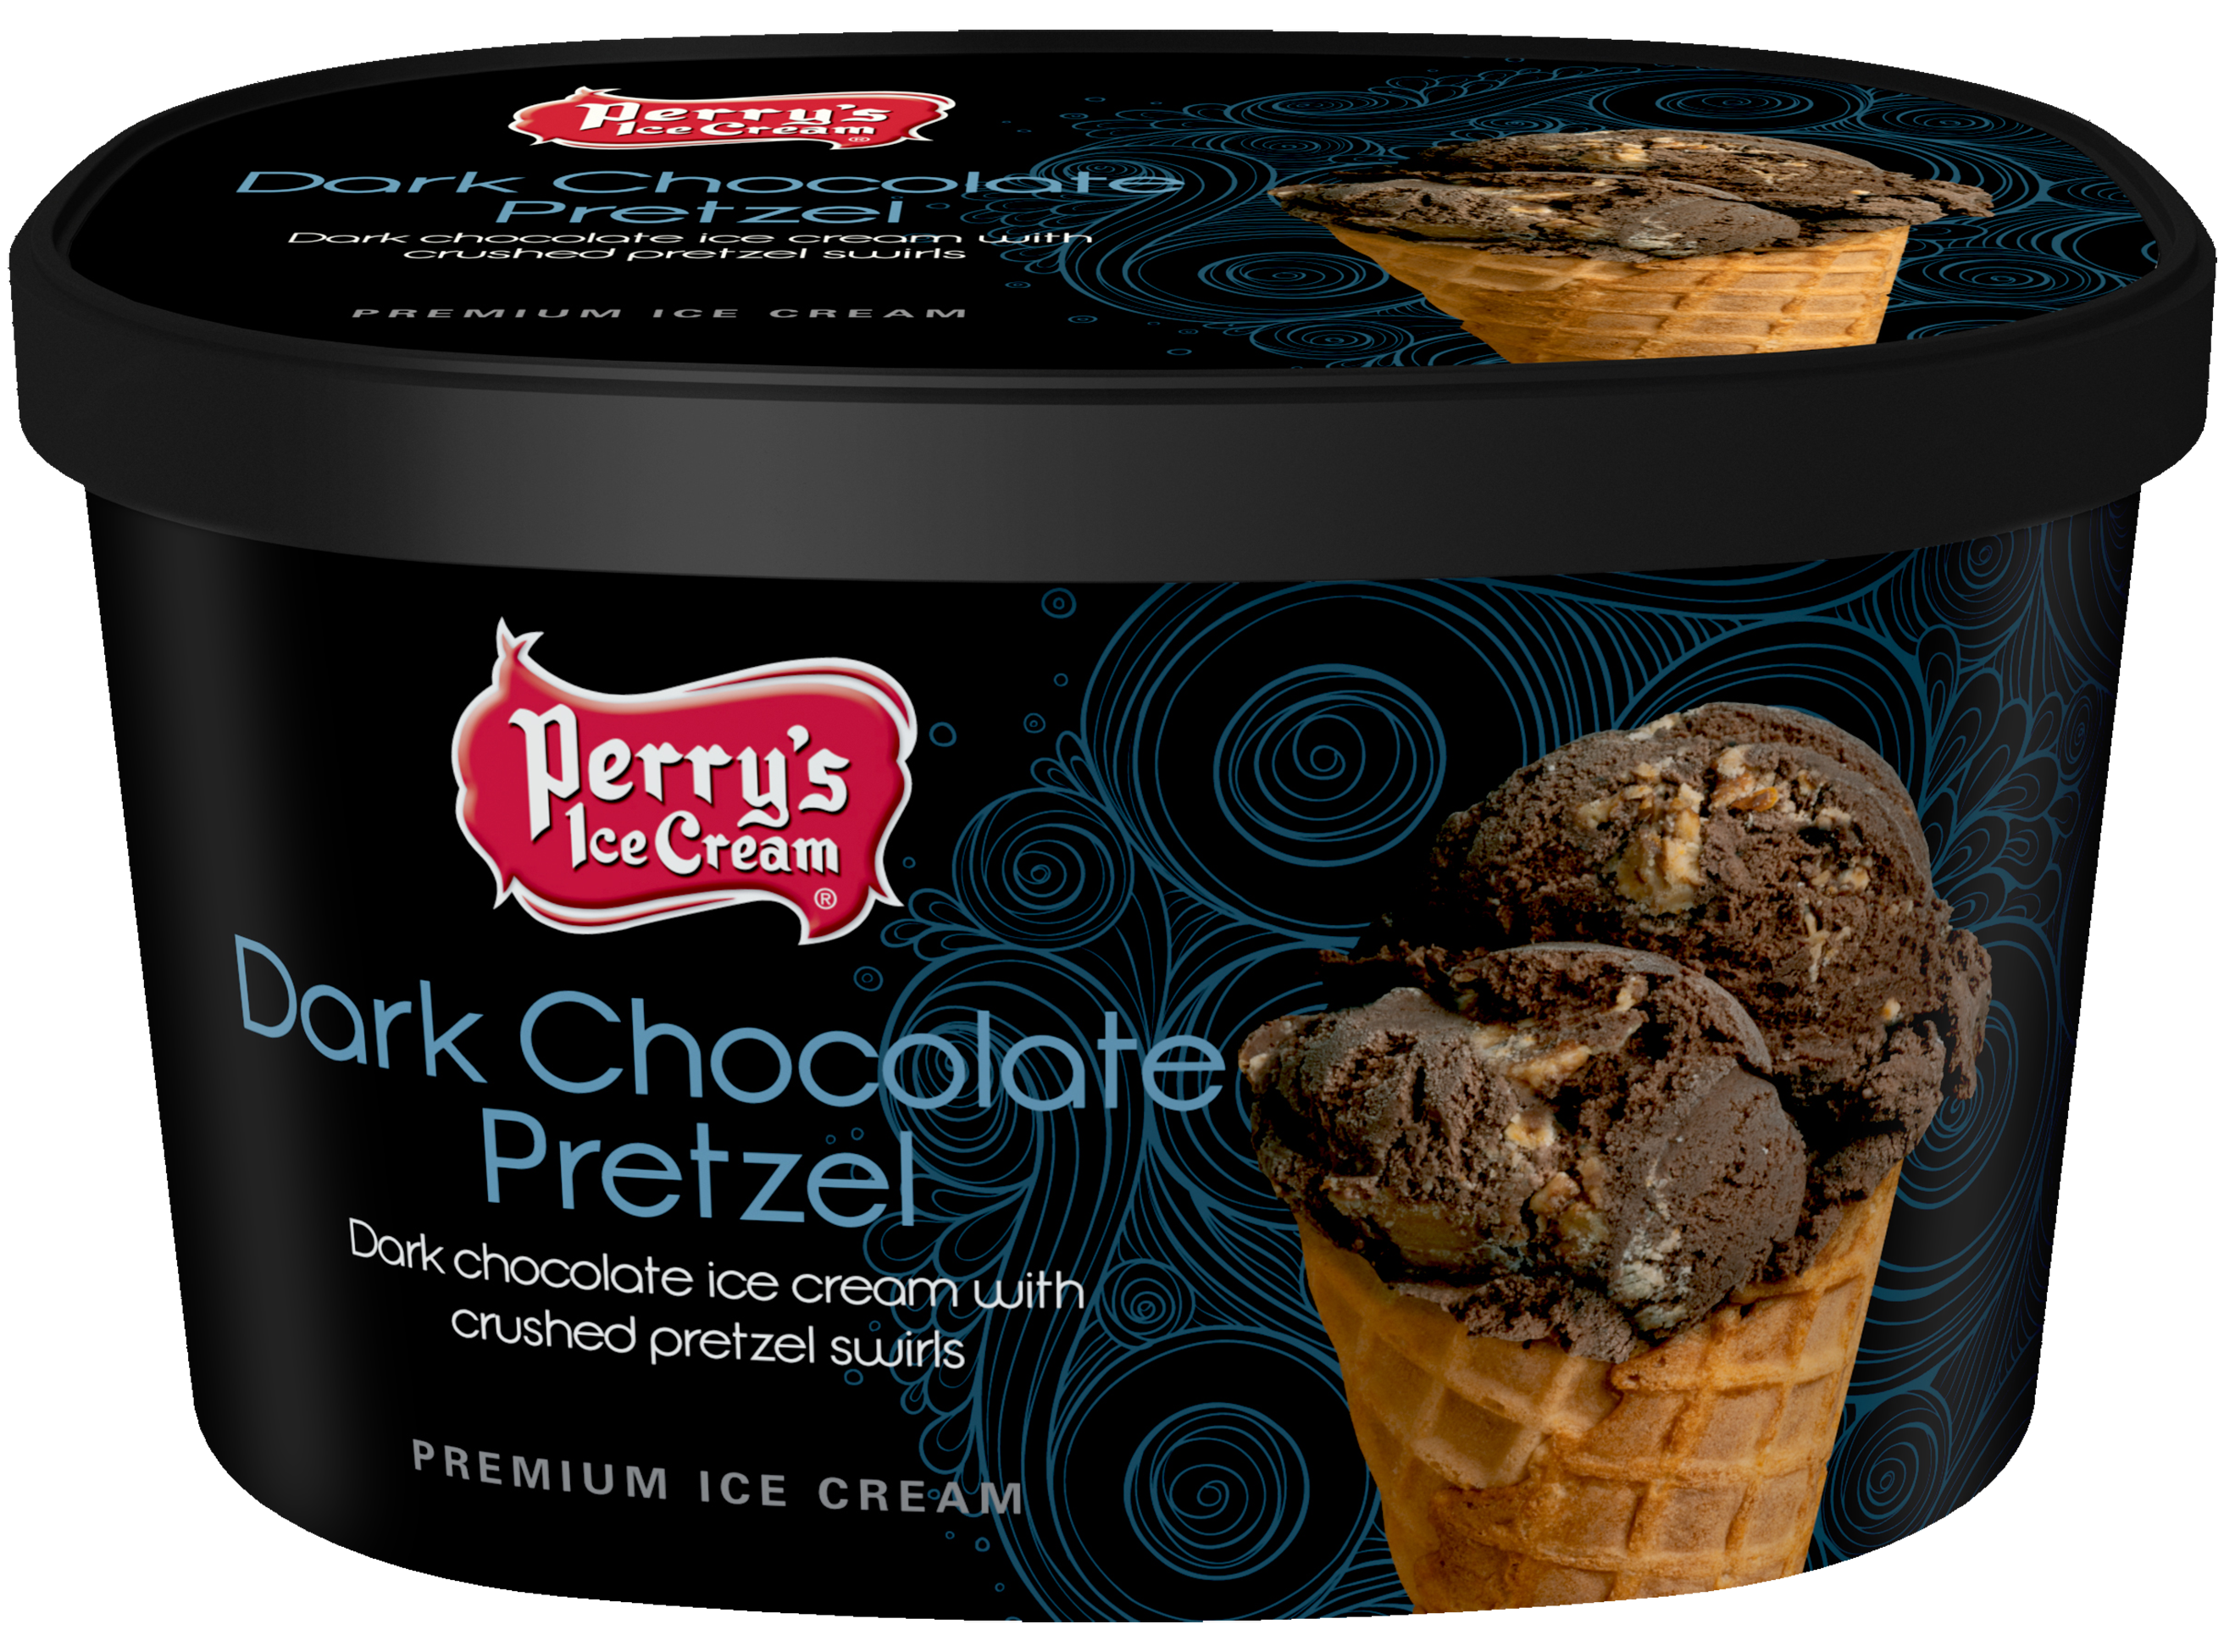 Dark Chocolate Pretzel ice cream